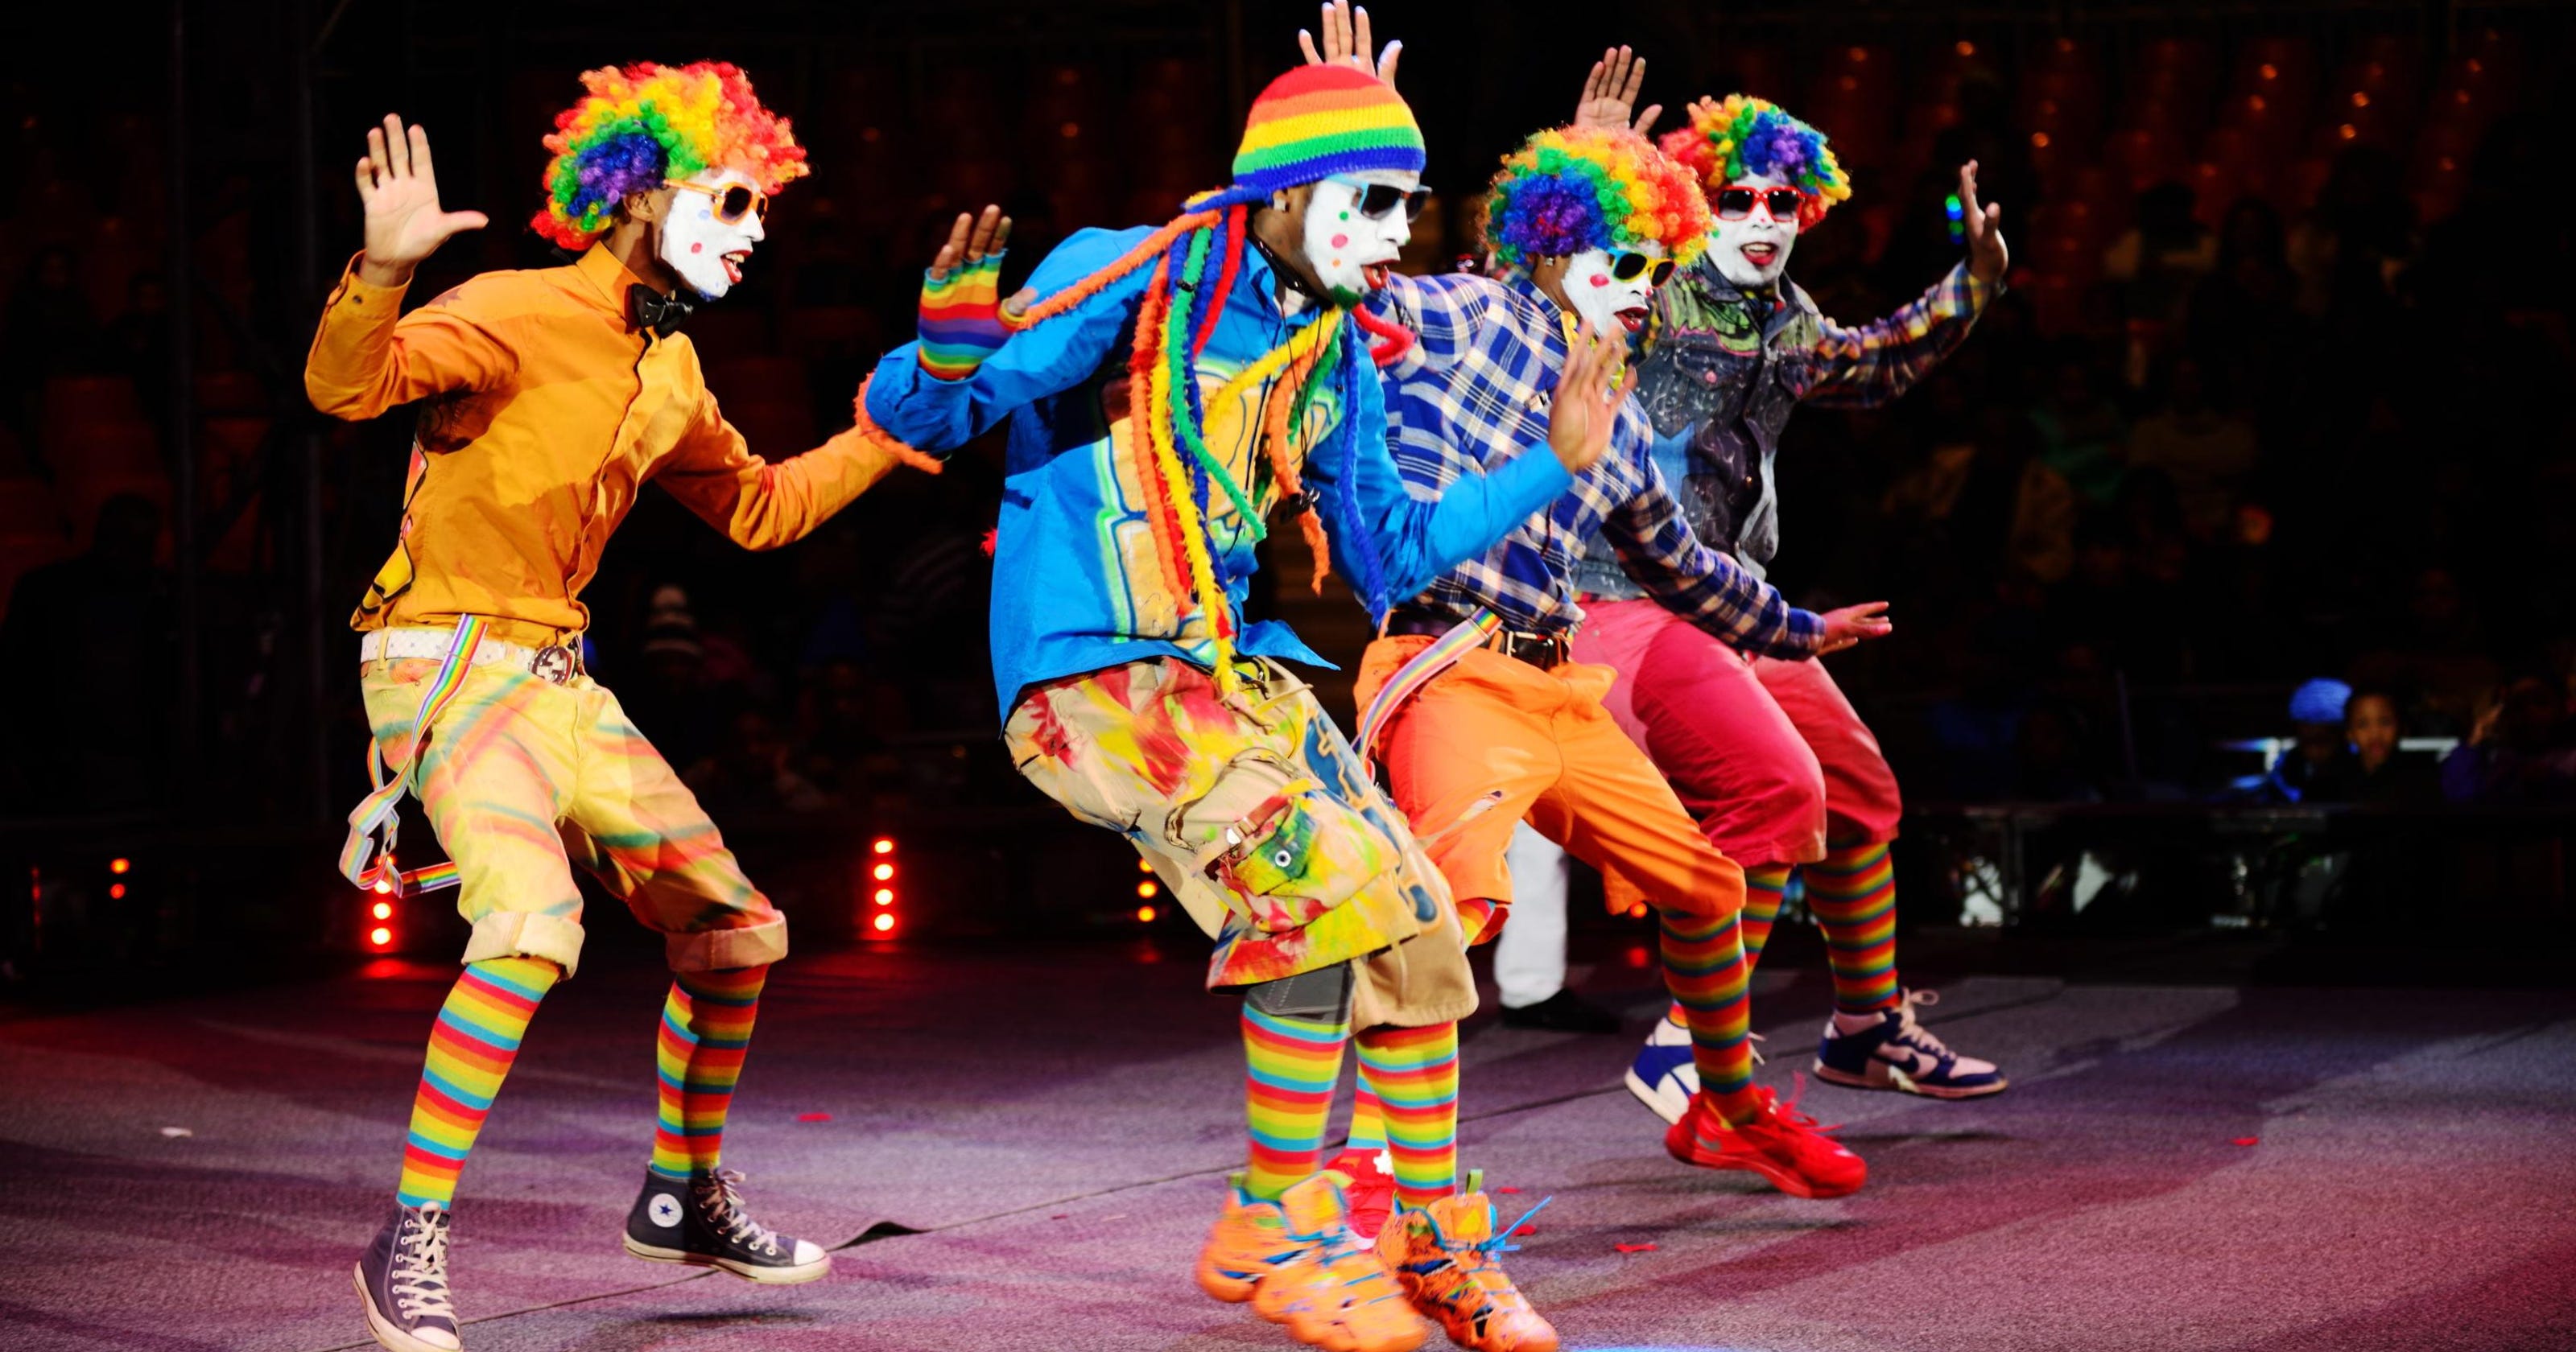 Detroit ‘Clownsss’ join UniverSoul Circus at Chene Park